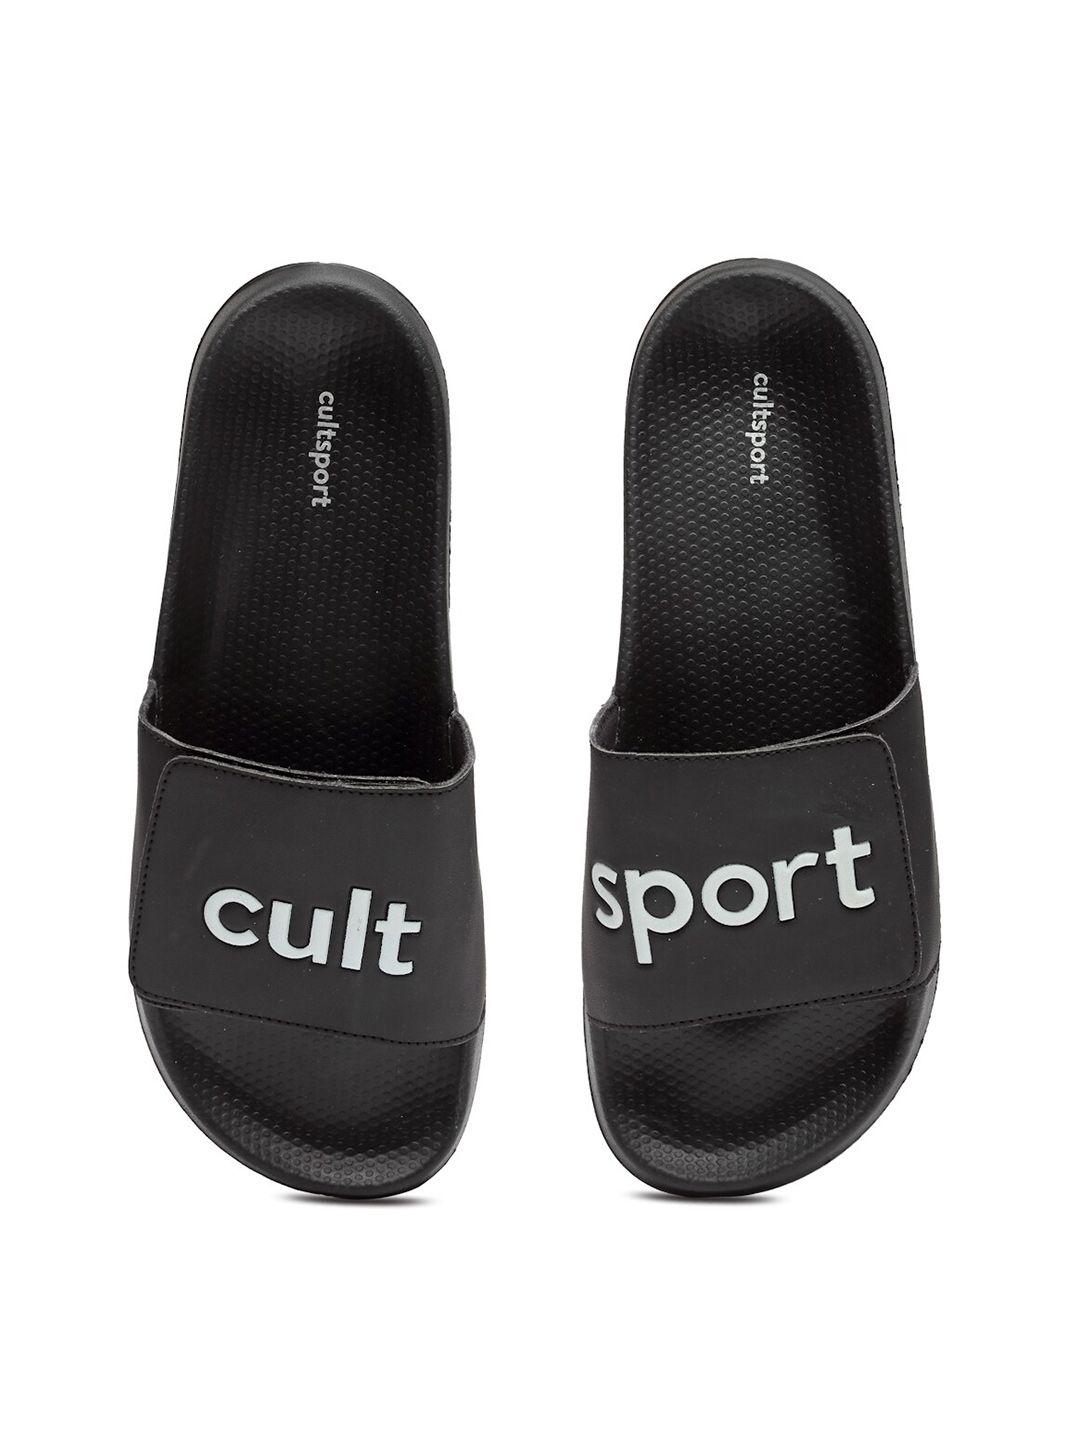 cultsport men black flip flops